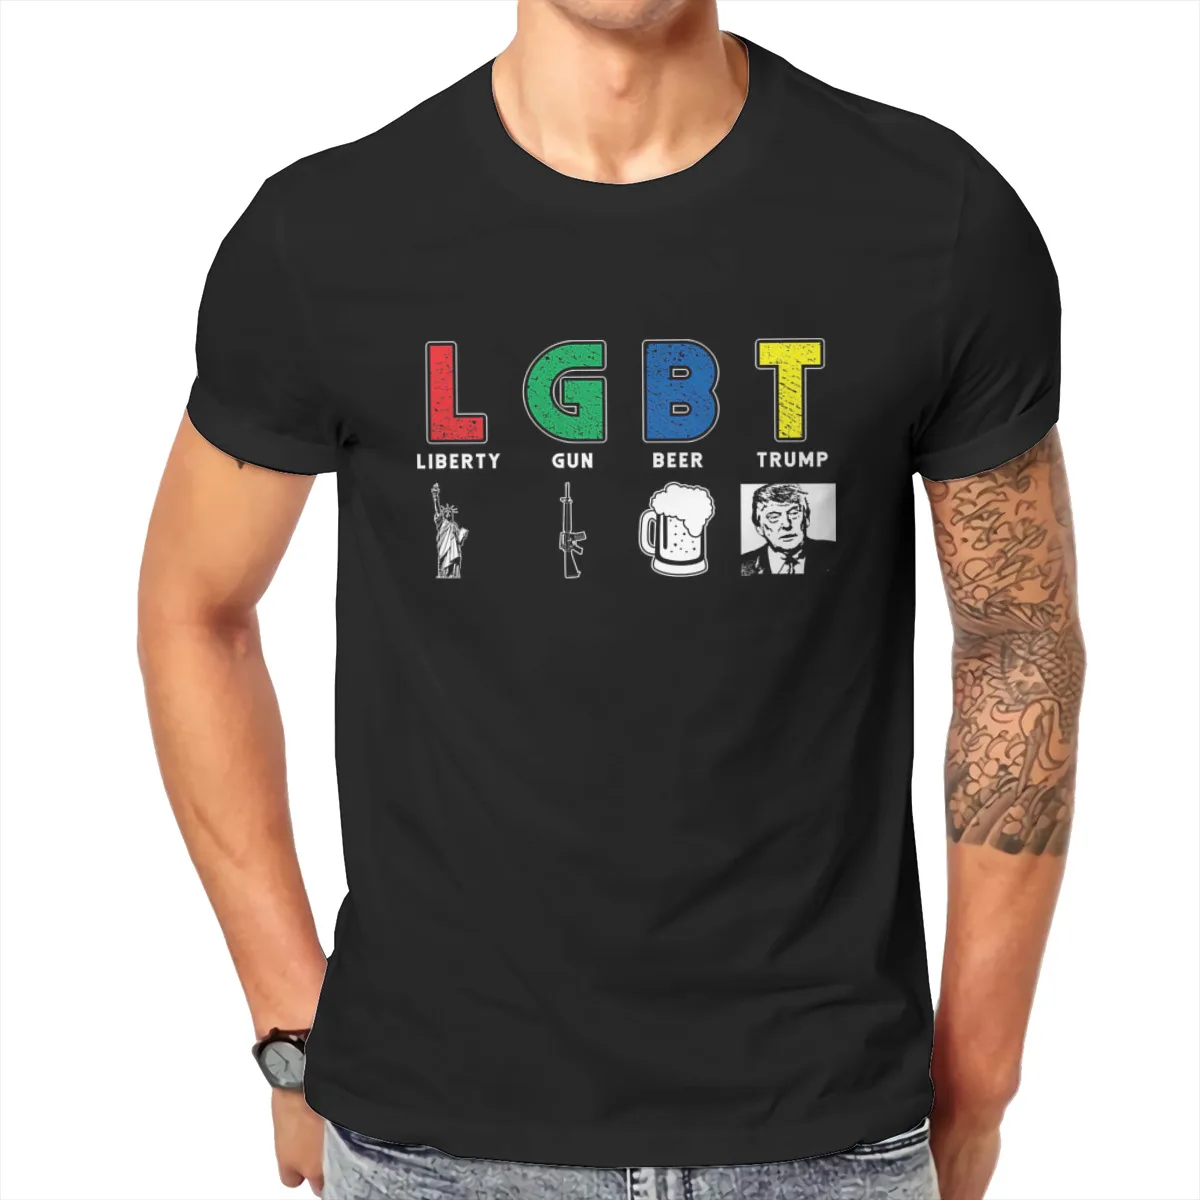 

LGBT Funny Gender Equality Lesbian Gay Bisexual Transgender Gift T shirt Men T shirt summer T-shirt